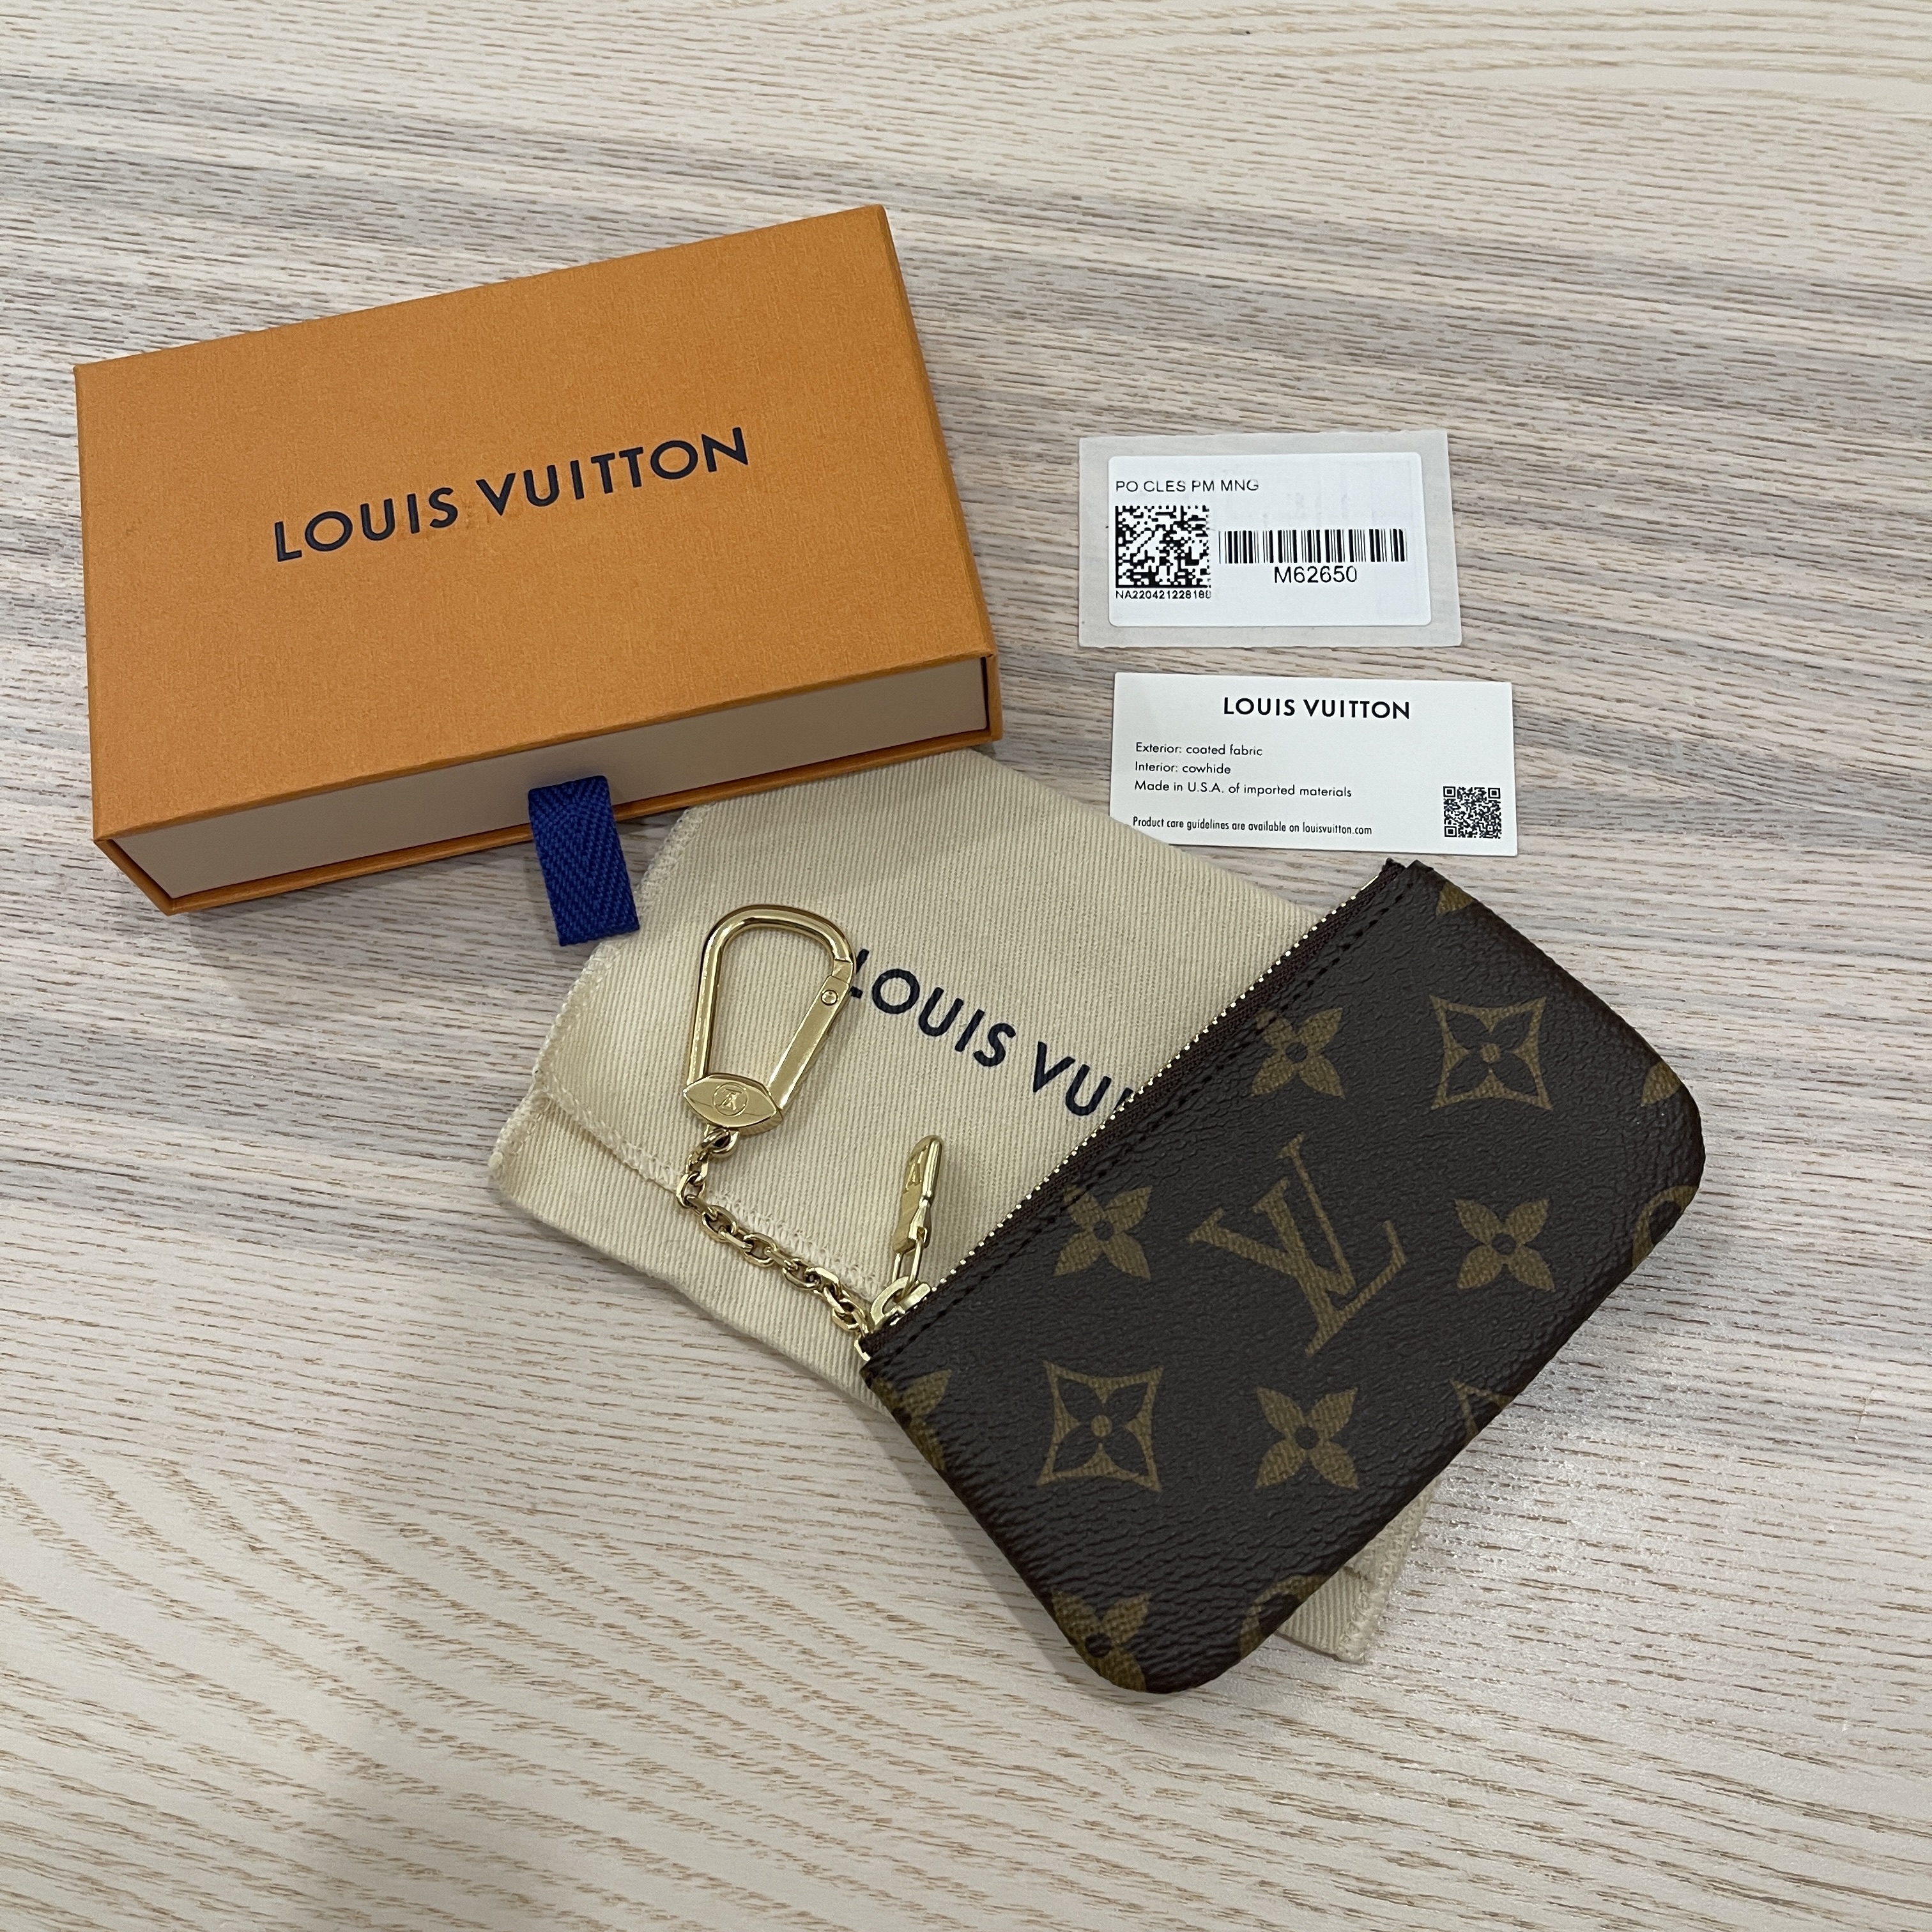 100% authenticity Guaranteed - Louis Vuitton Monogram Vernis 4 Key Cles